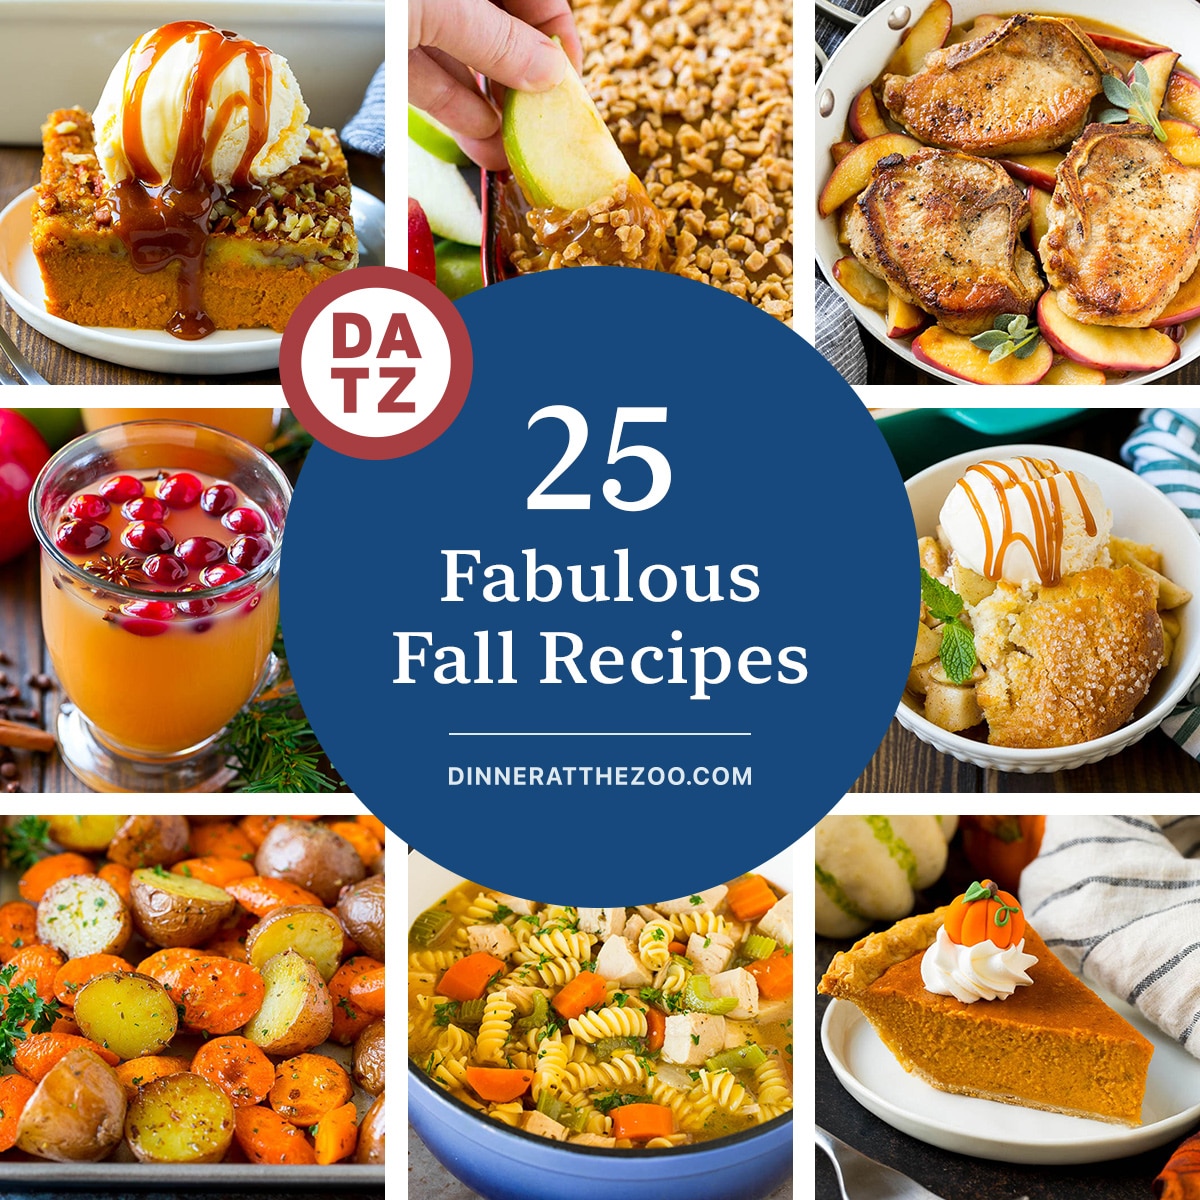 A group of fabulous fall recipes like caramel apple dip, homemade pumpkin pie and apple cobbler.